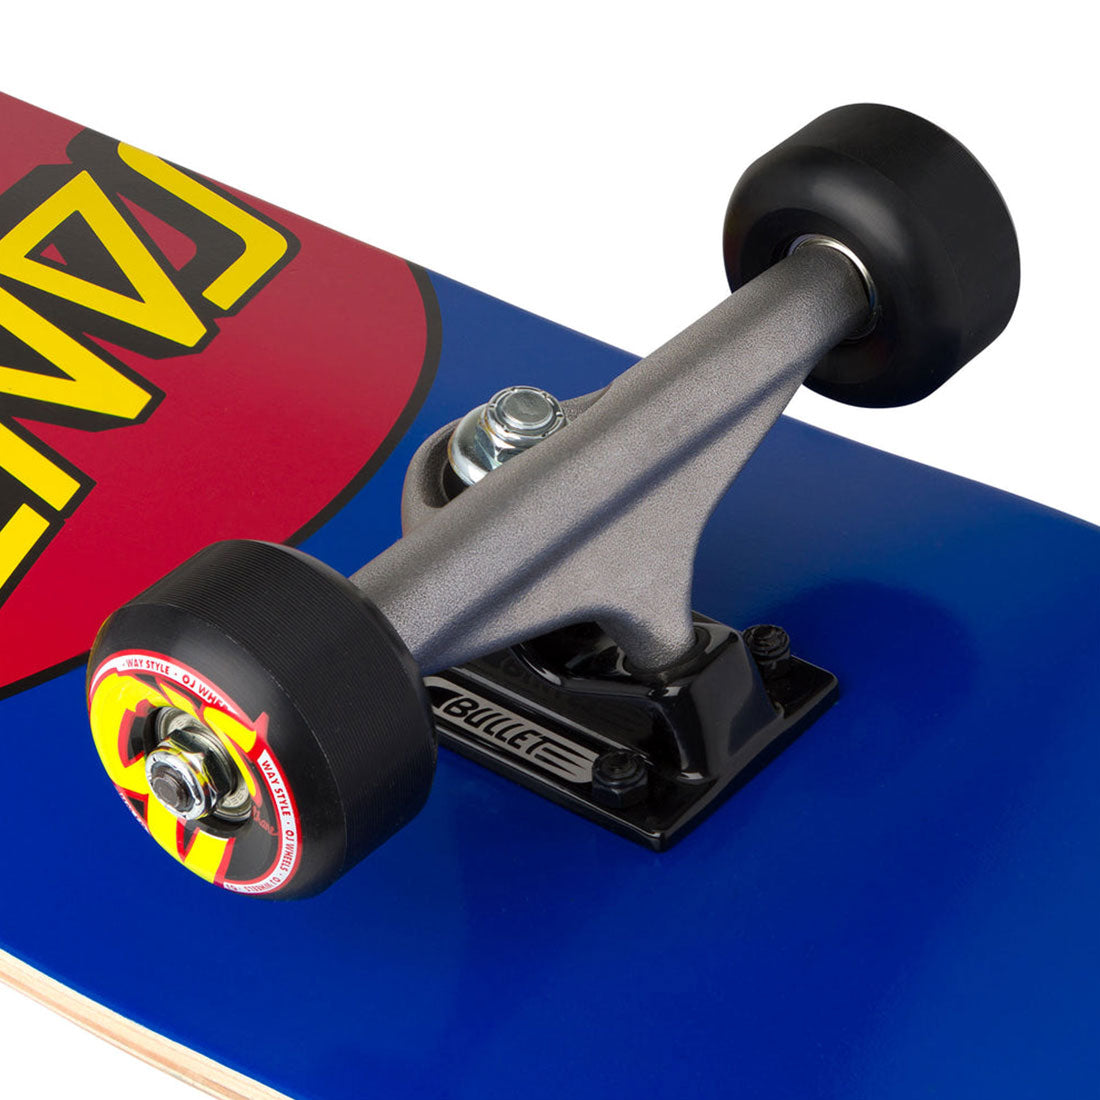 Santa Cruz Classic Dot 8.0 Complete - Blue/Black Skateboard Completes Modern Street